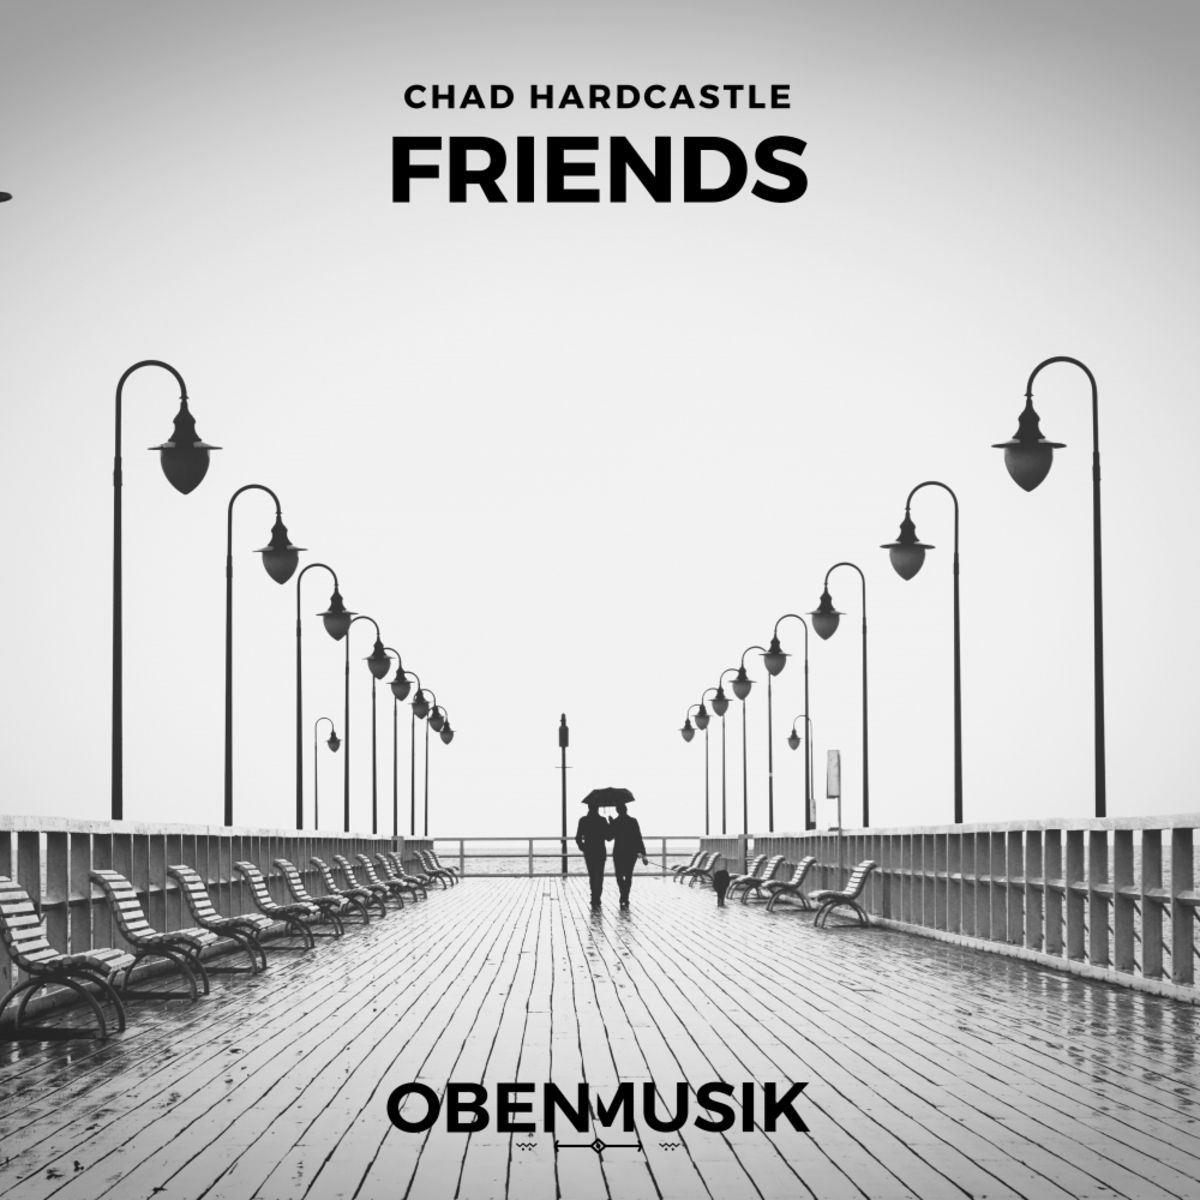 Chad Hardcastle - Friends / Obenmusik